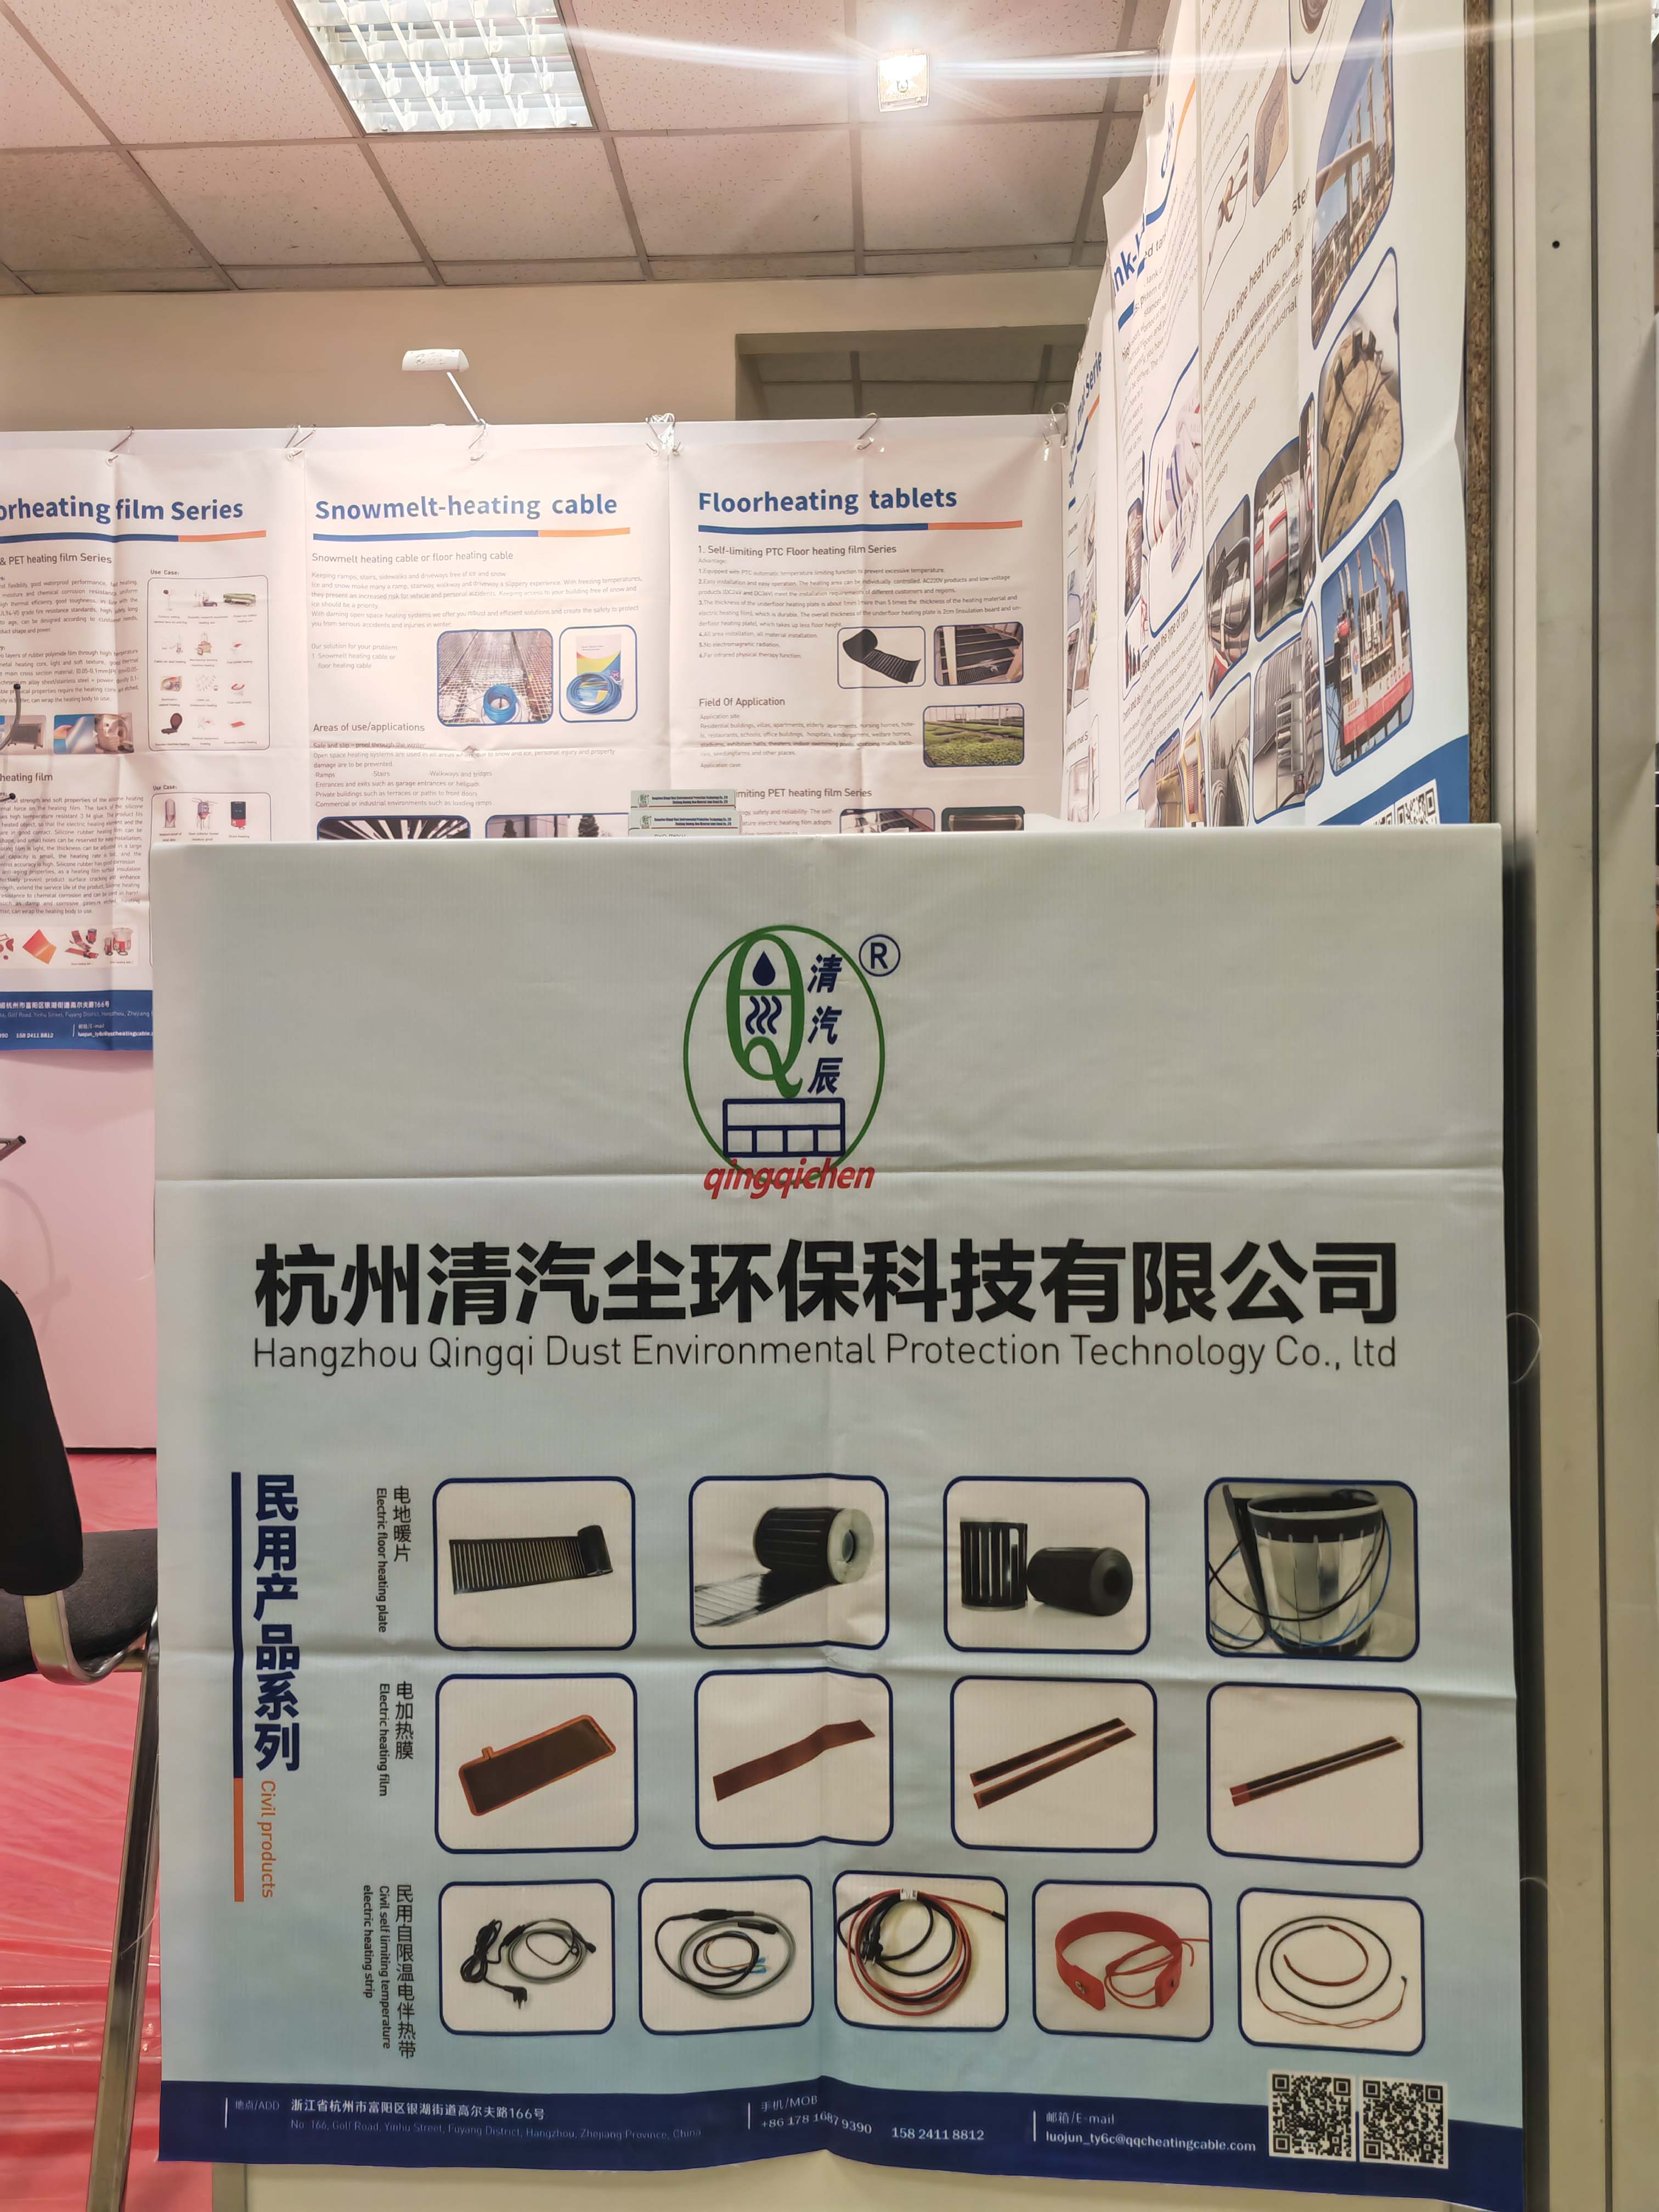  Hangzhou Qingqi Dust Environmental Protection Technology Co., Ltd. 19-21 মার্চ মস্কো, রাশিয়ায় CabeX প্রদর্শনী, নির্দেশিকা বিনিময় ও আলোচনার জন্য প্রদর্শনীতে রাশিয়ান বন্ধুদের স্বাগত জানাই 